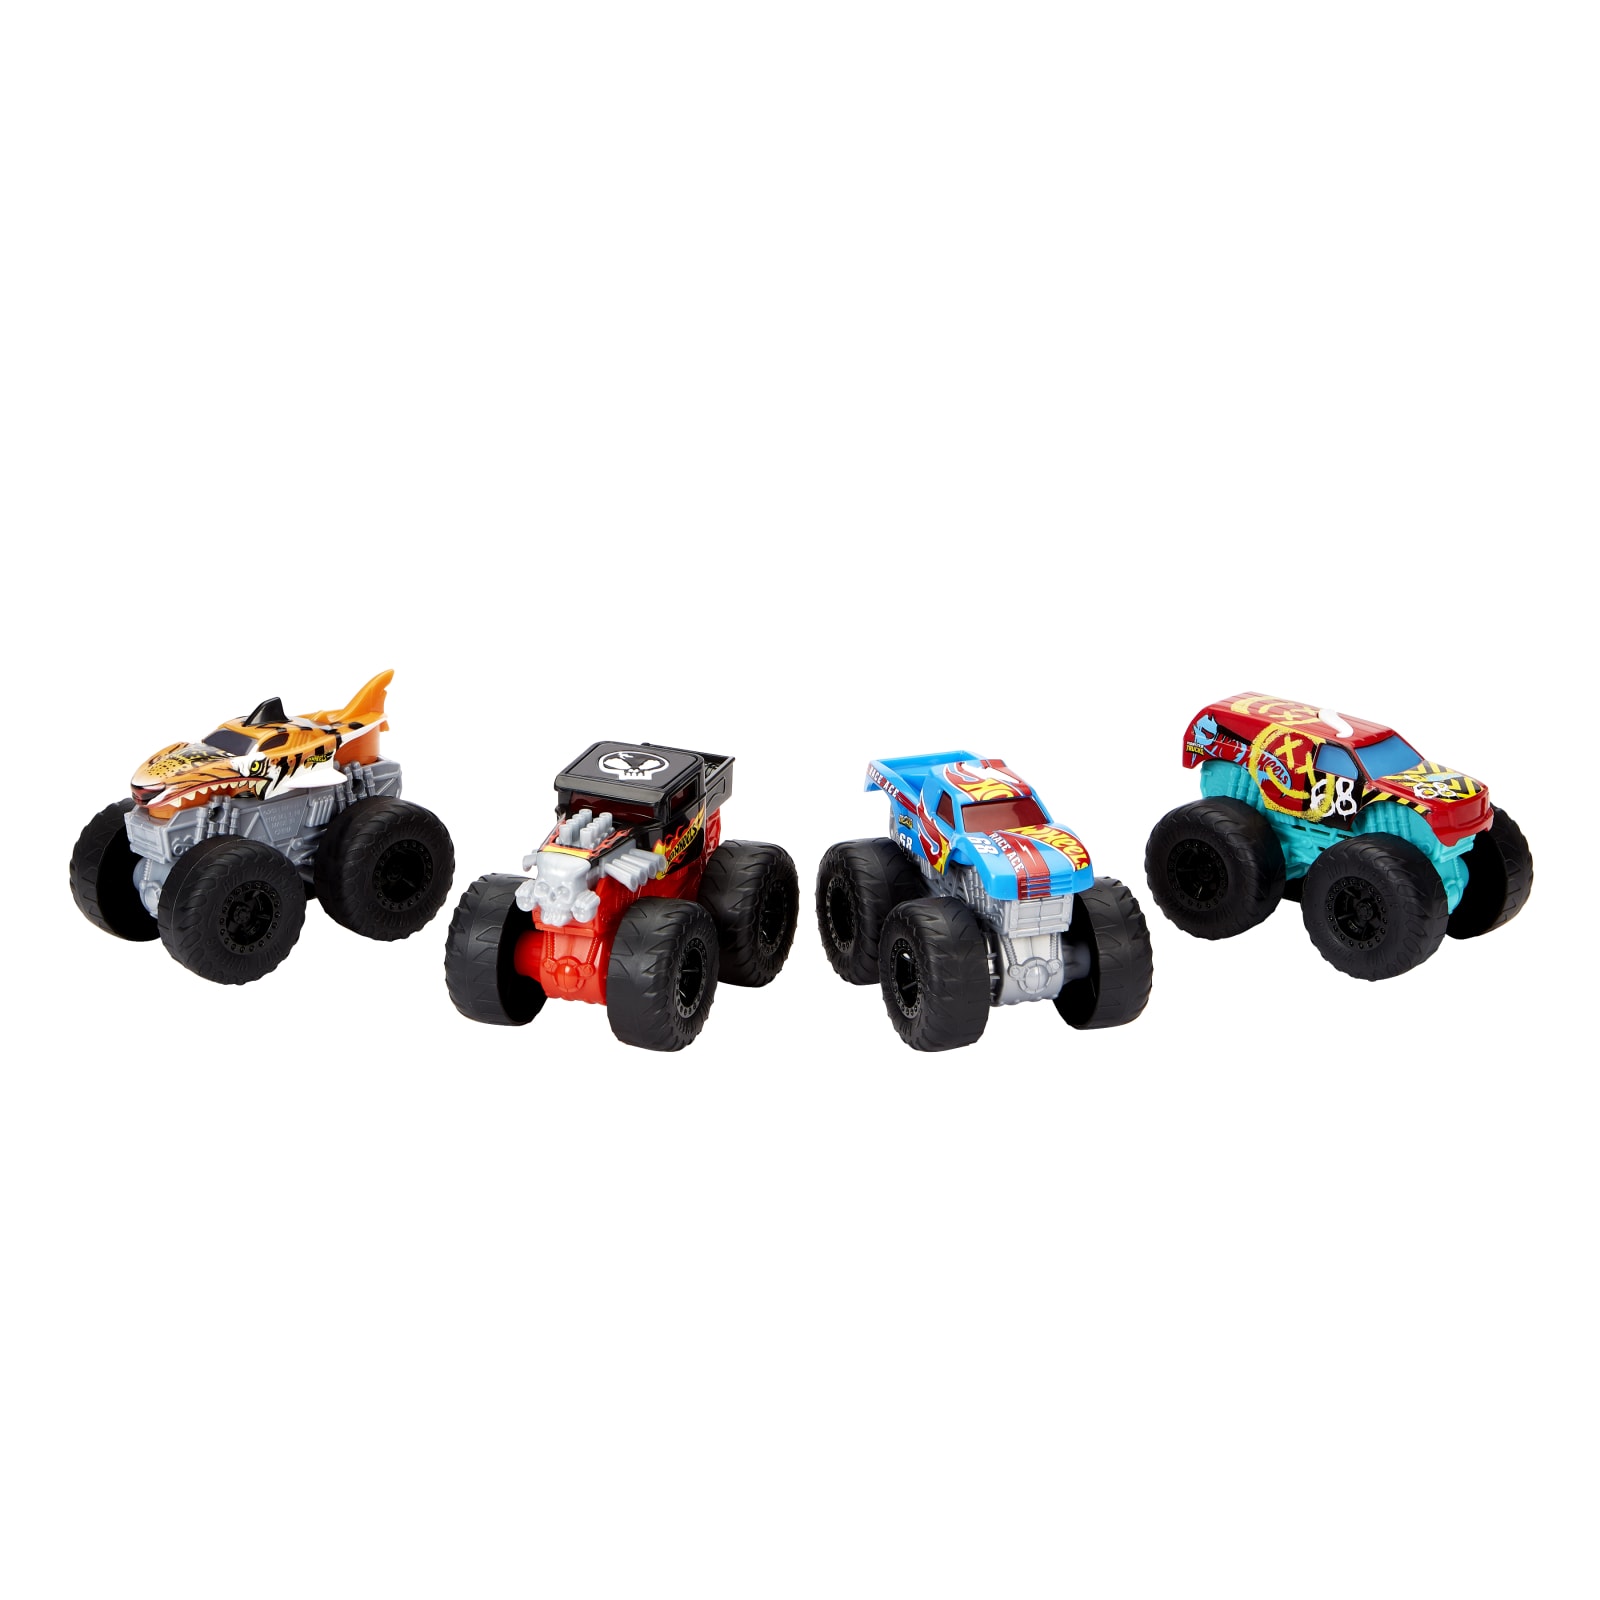 Mario Kart Vehicles - Assorted by Hot Wheels at Fleet Farm